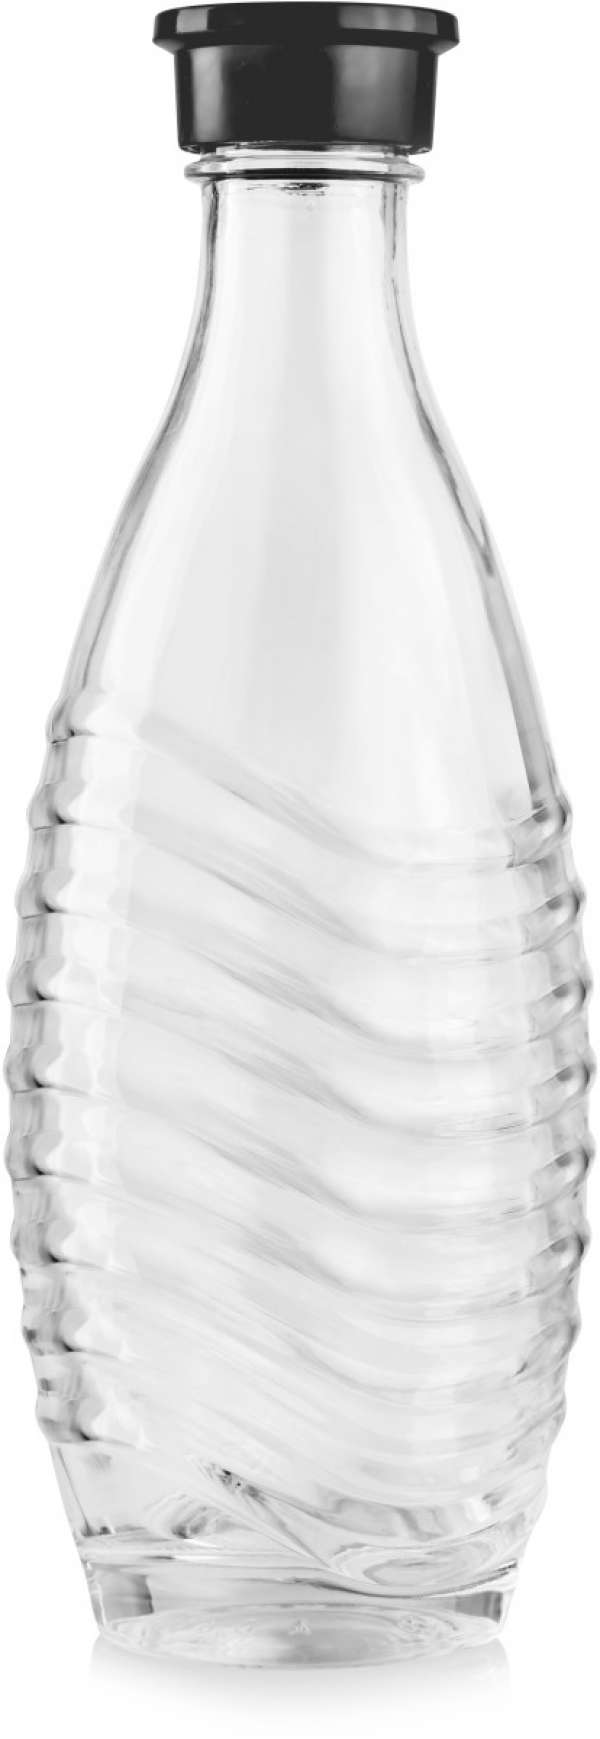 0,7 L palack Penguin/Crystal SODA - Méretet 0,7 L